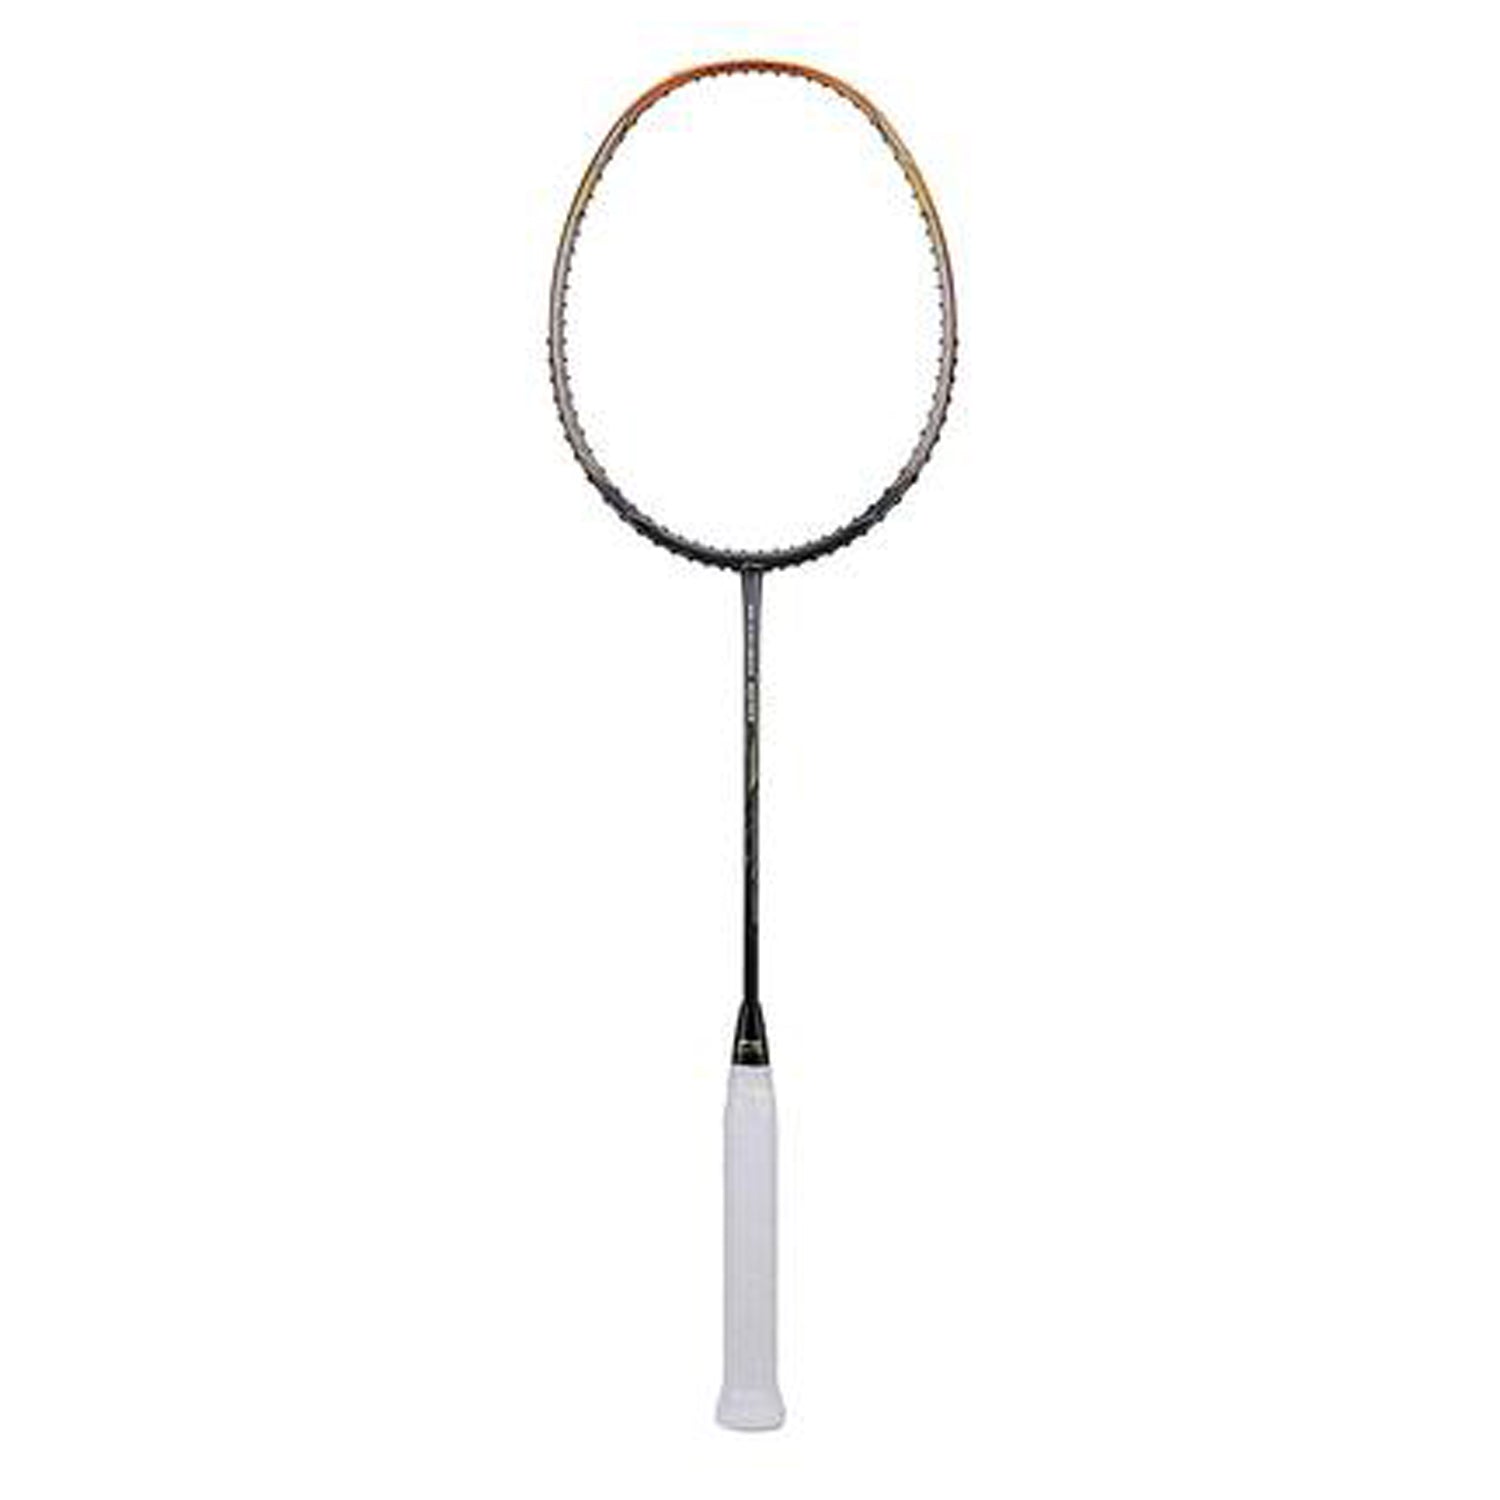 Li-Ning 3D CALIBAR 600 Carbon-Fiber Unstrung Badminton Racquet - Best Price online Prokicksports.com